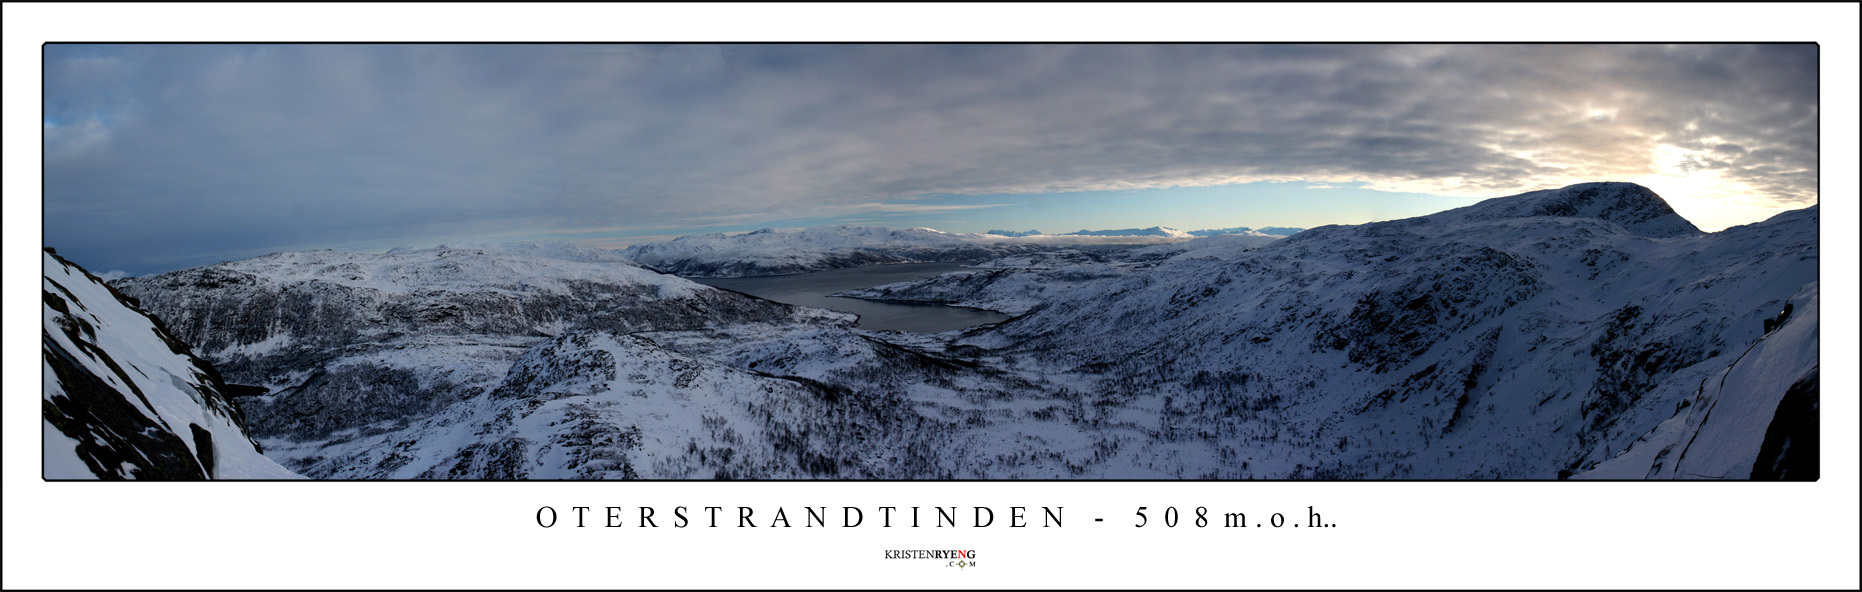 PanoramaOterstrandtinden.jpg - Utsikt fra Oterstrandtinden på Kvaløya. Dato : 15.02.09